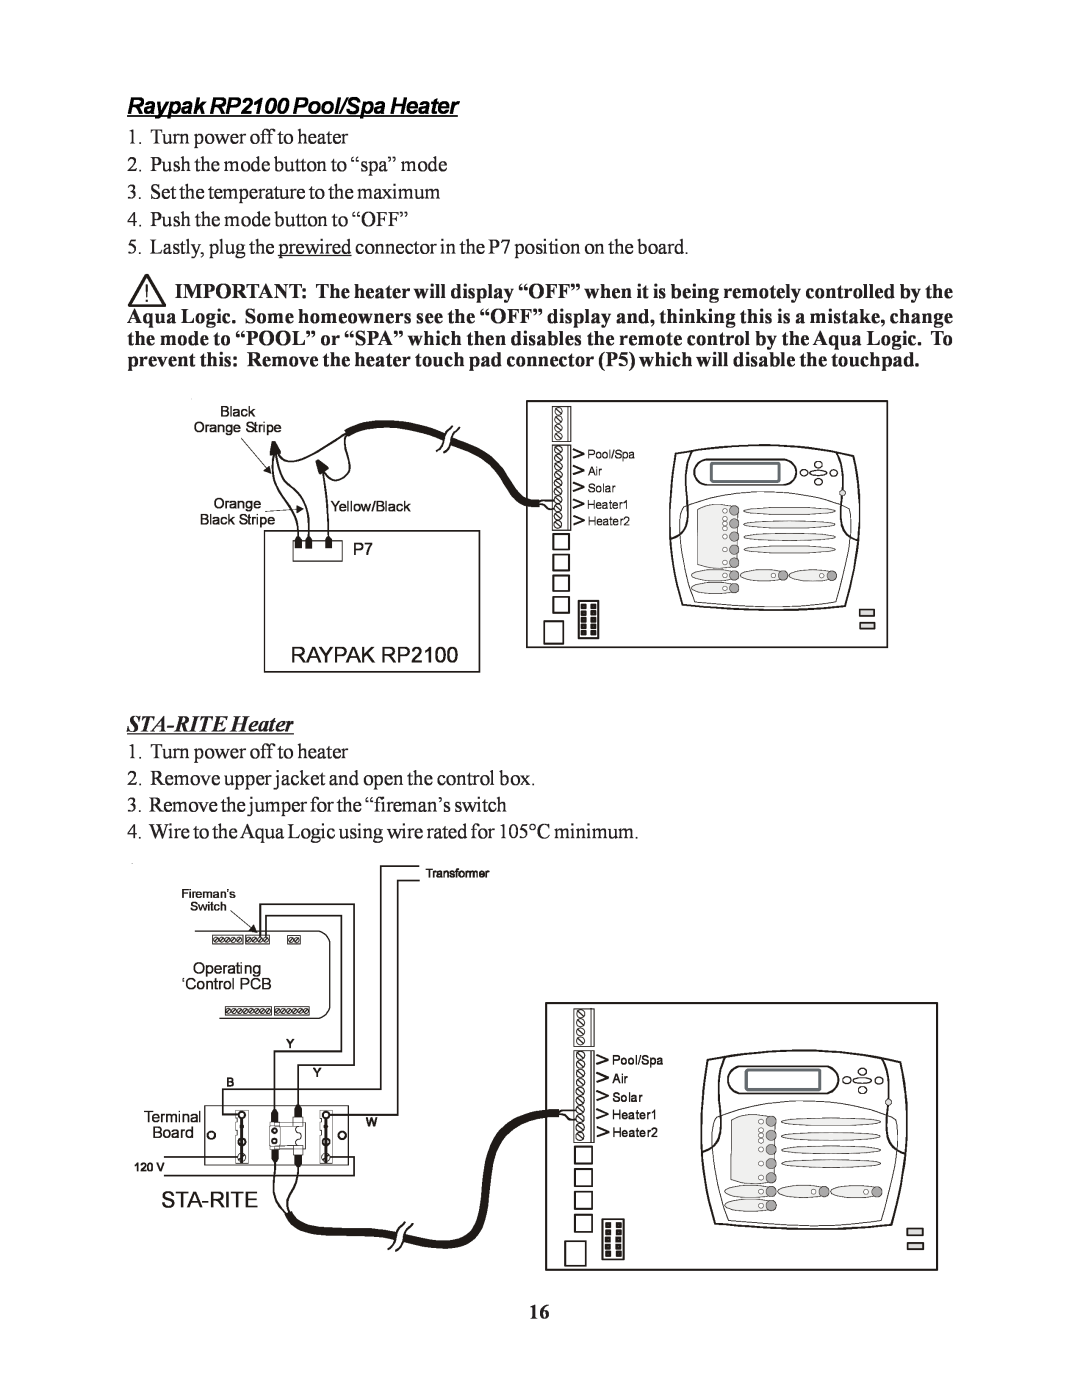 Raypak PS-4 PS-8 installation manual Raypak RP2100 Pool/Spa Heater, STA-RITEHeater, RAYPAK RP2100, Sta-Rite 